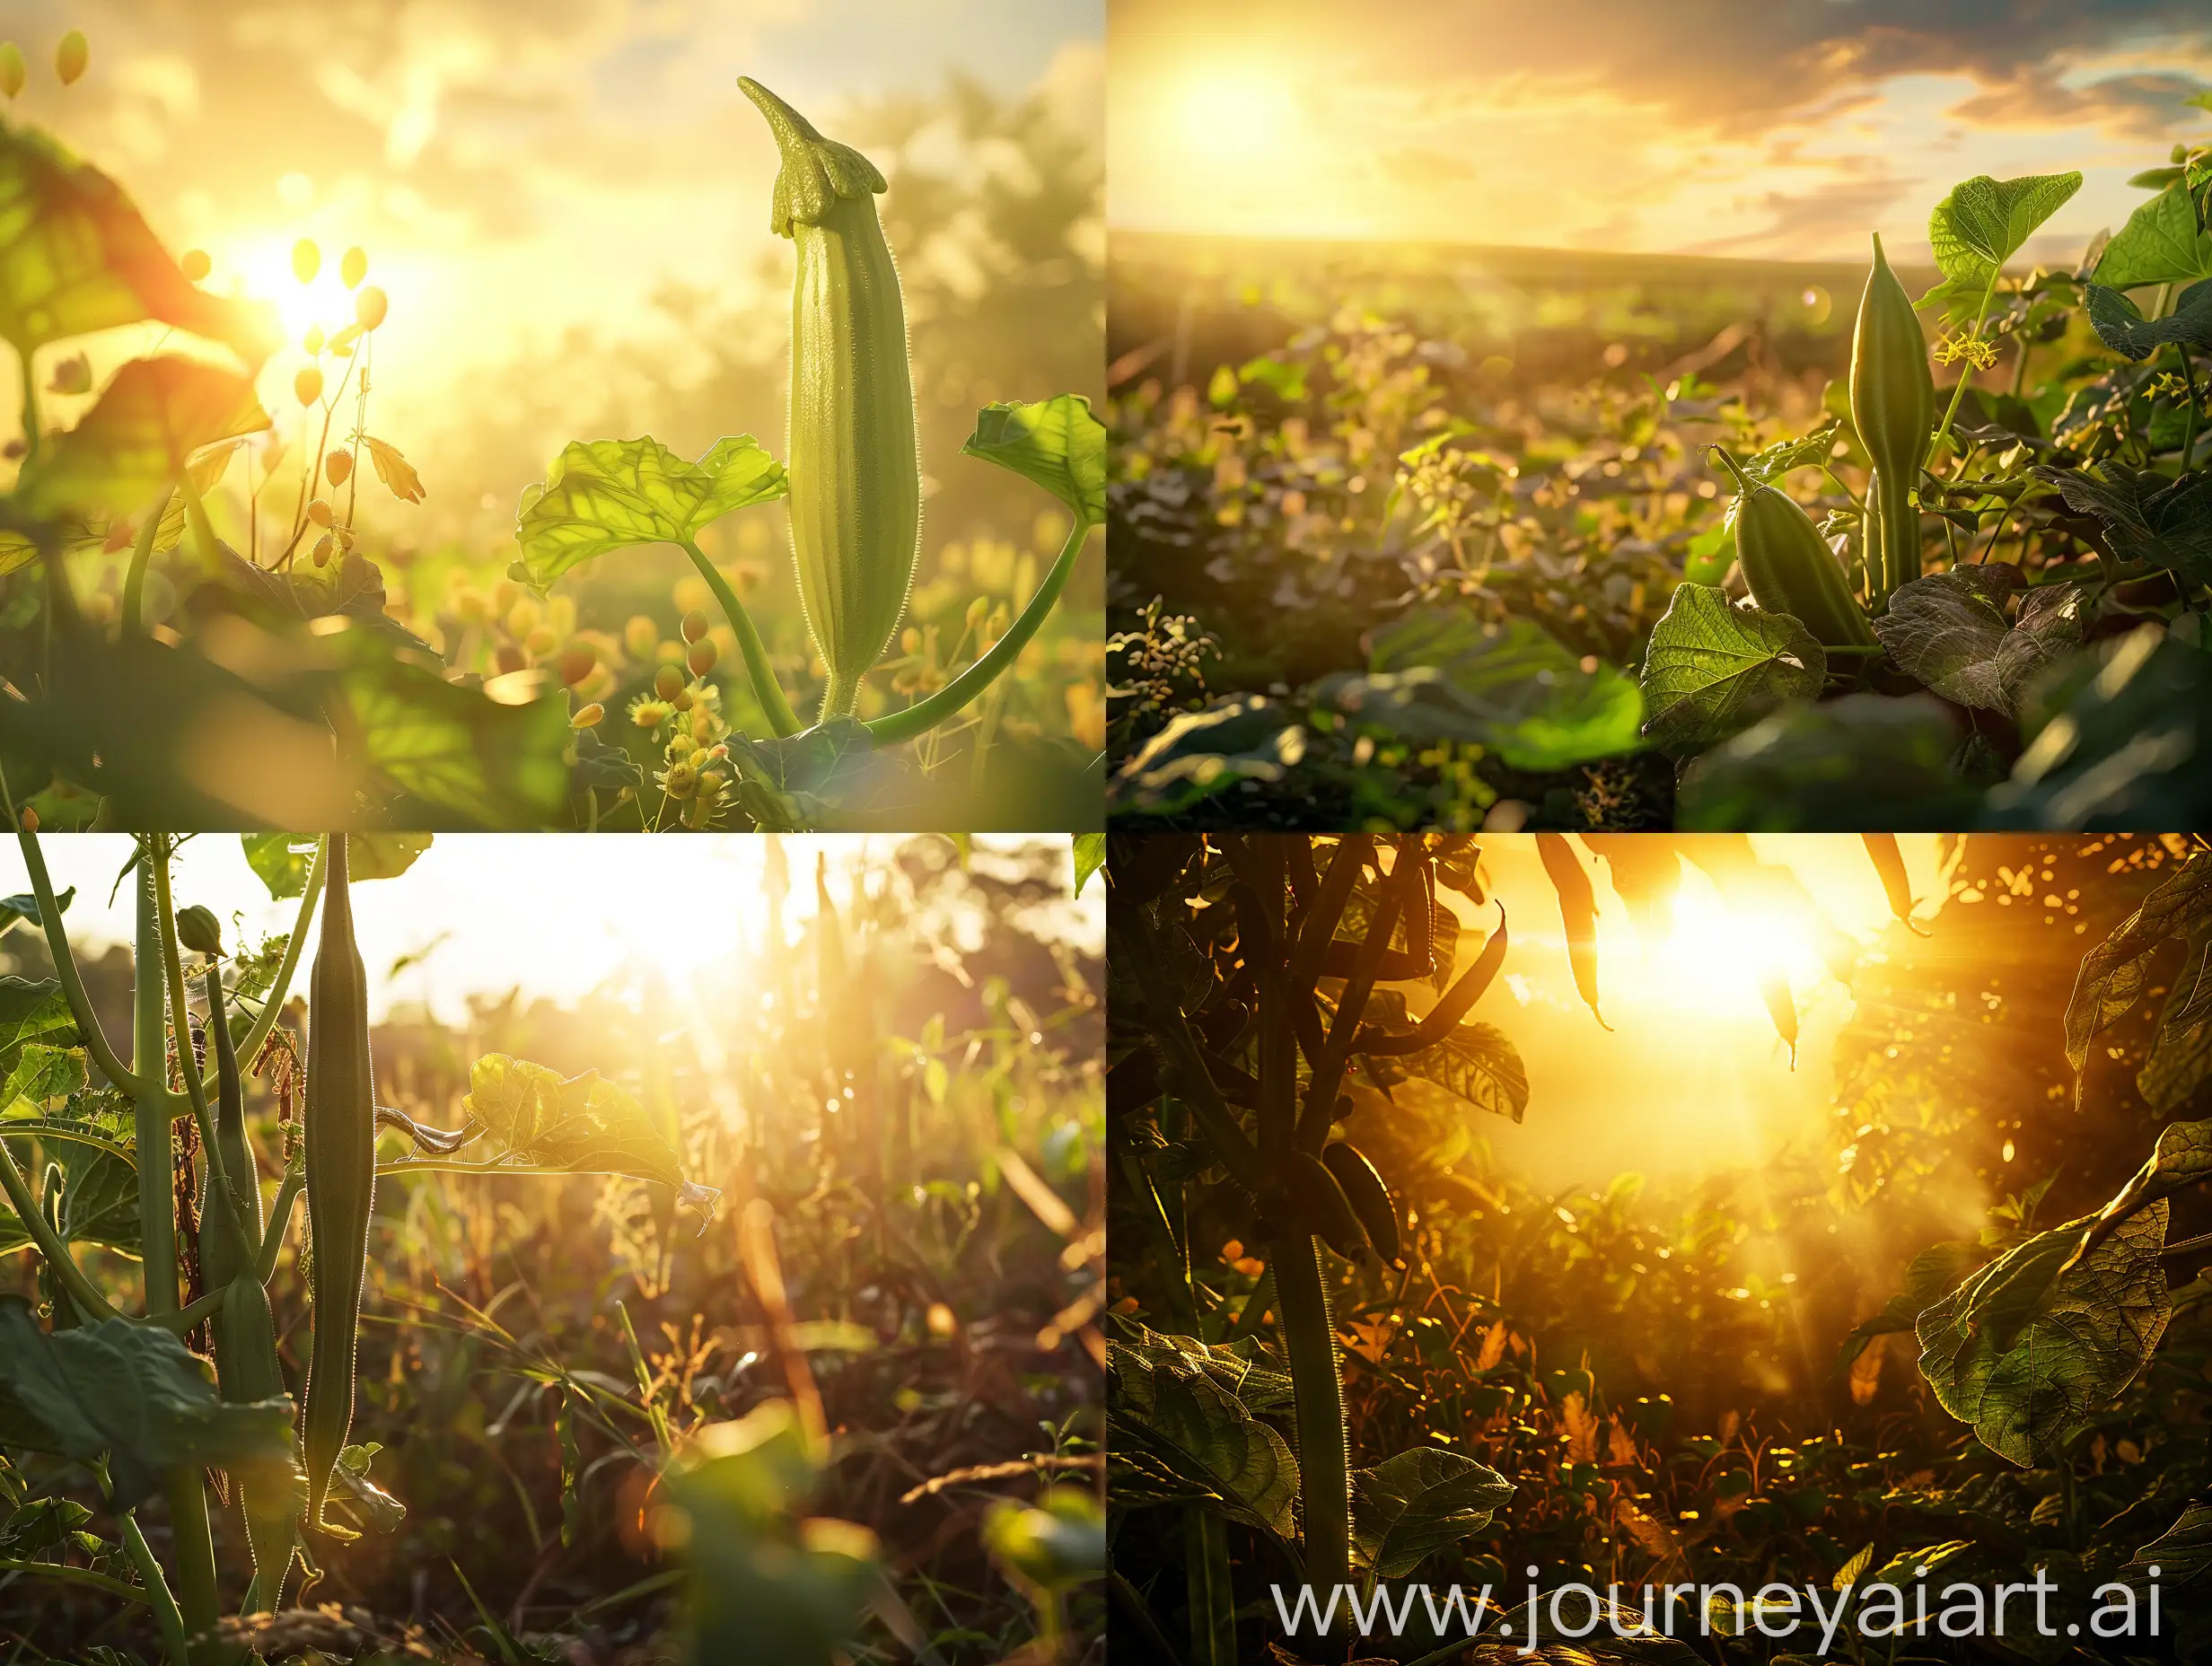 Vibrant-Okra-in-Golden-Sunlight-Capturing-Natural-Beauty-in-Detail